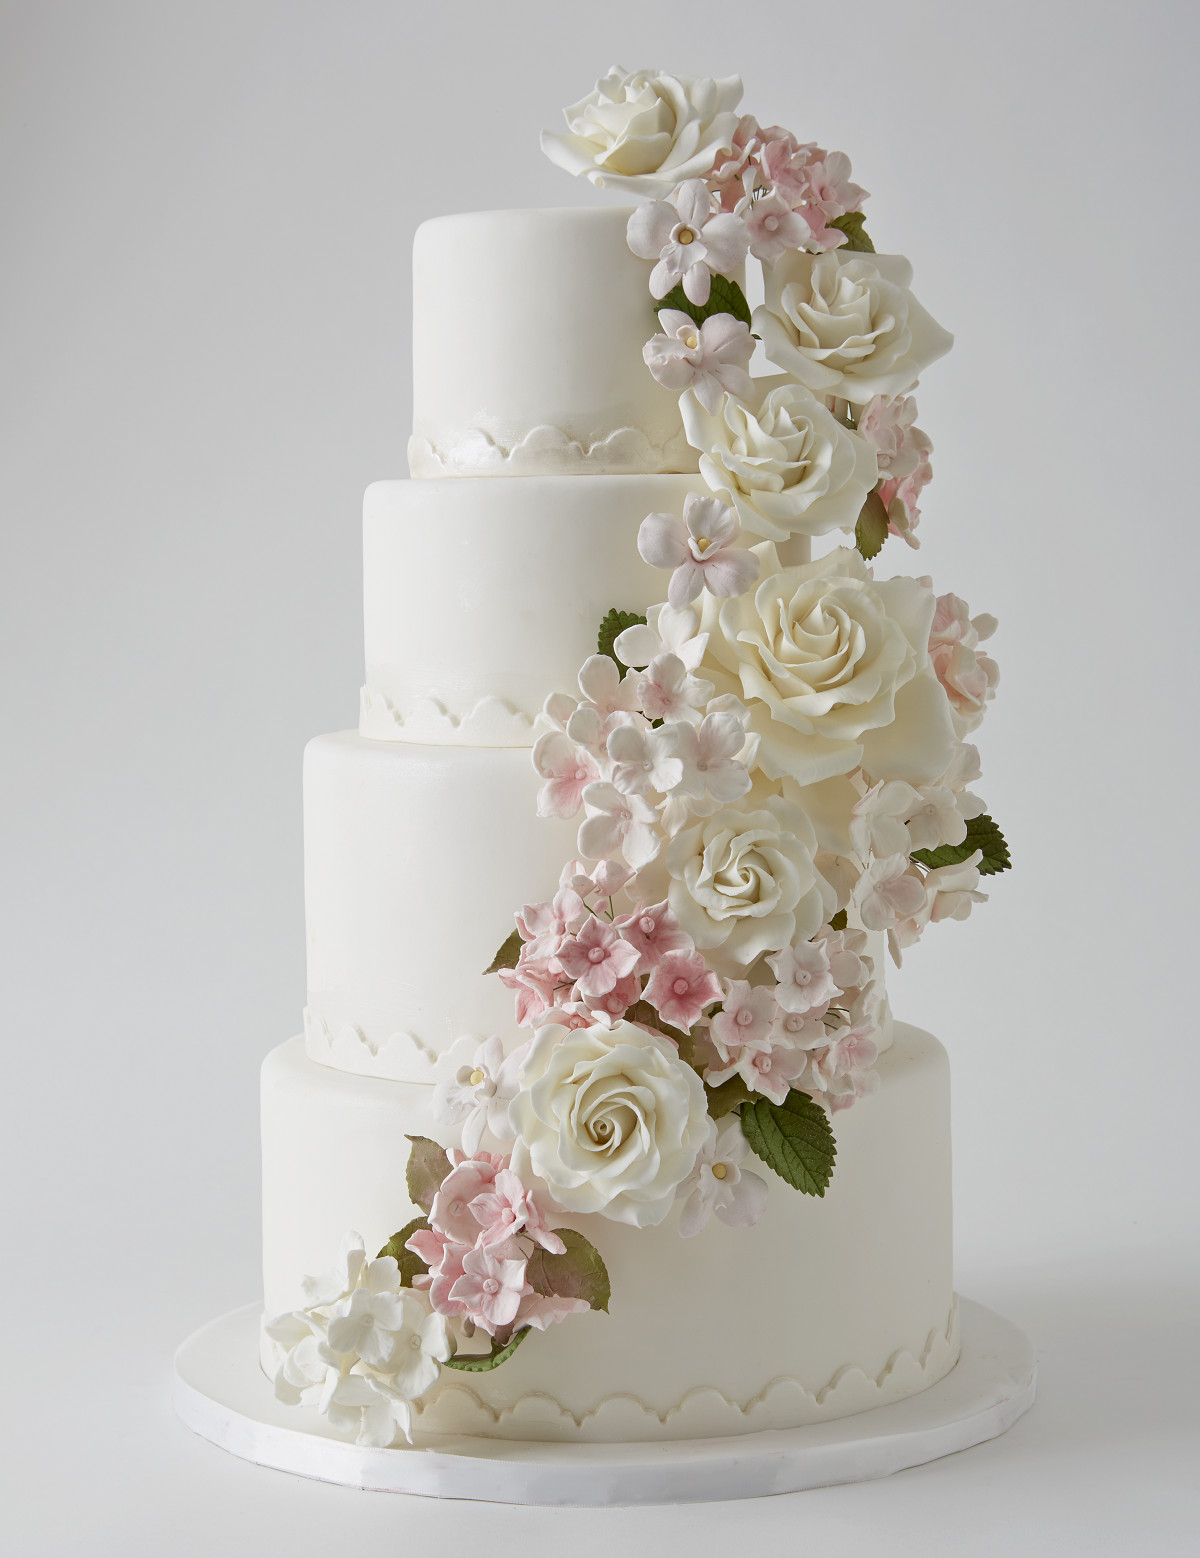 Spring Wedding Cakes
 30 Enchanting Spring Wedding Cake Ideas